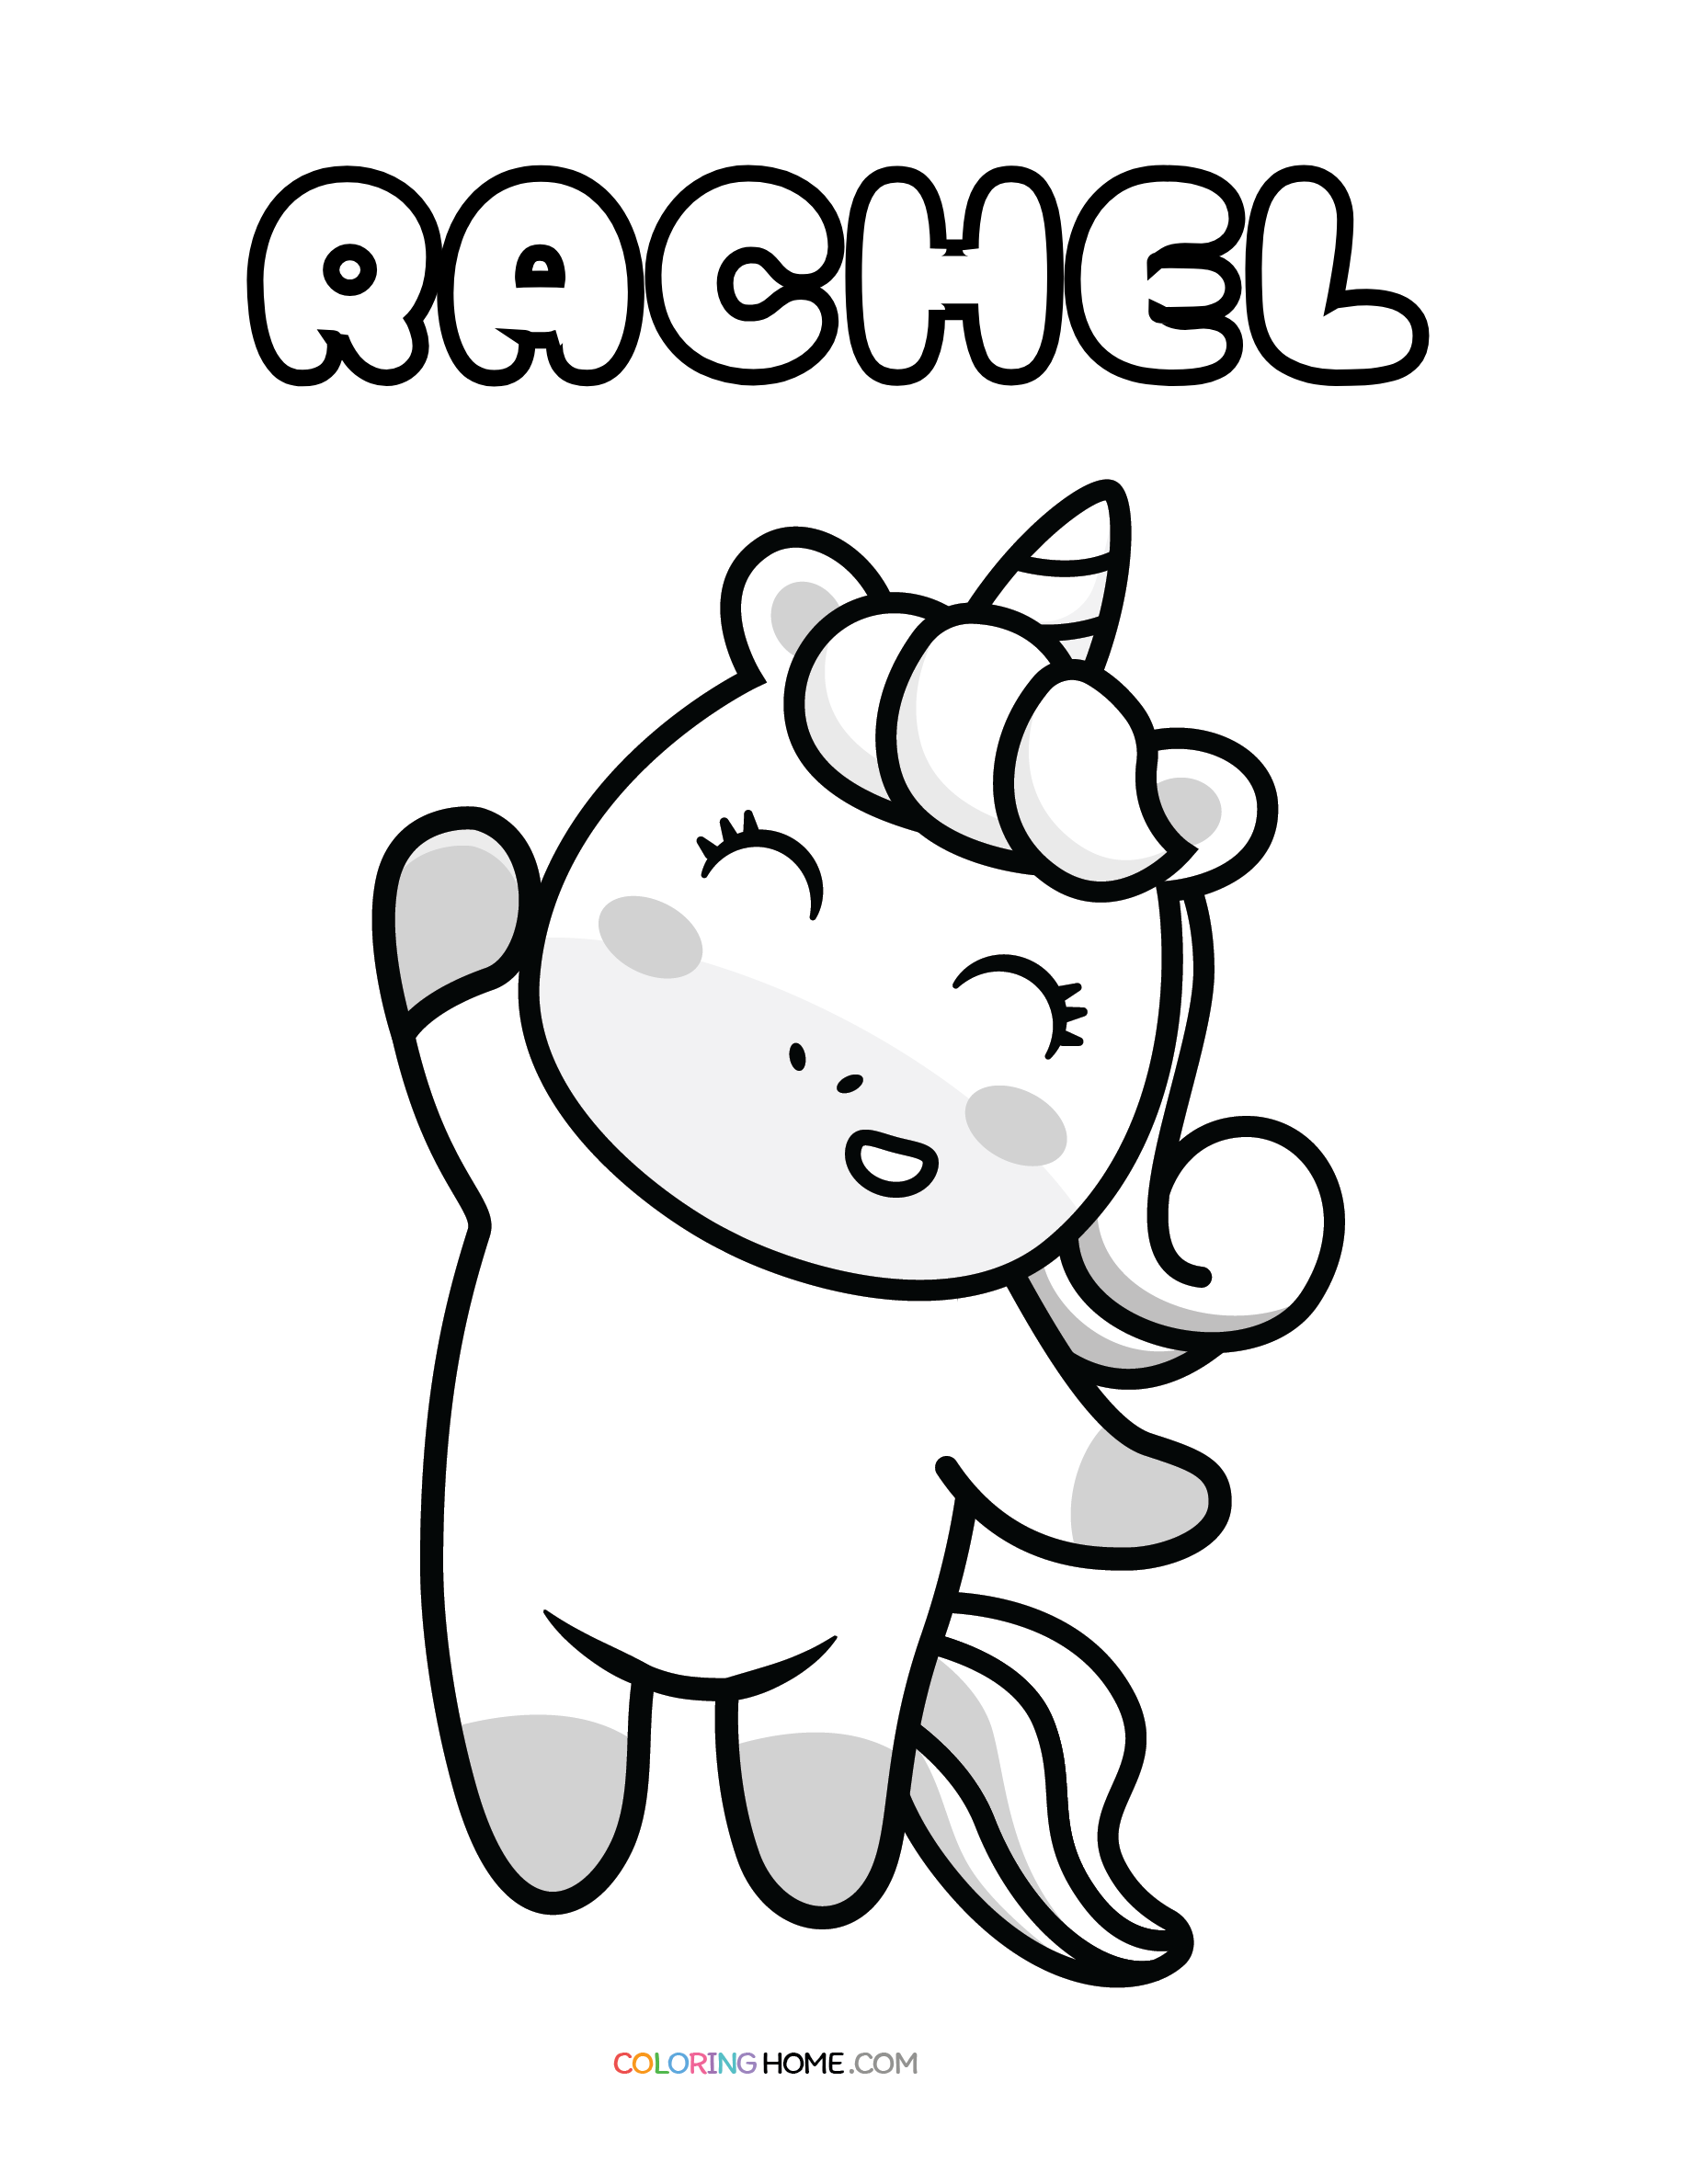 Rachel unicorn coloring page